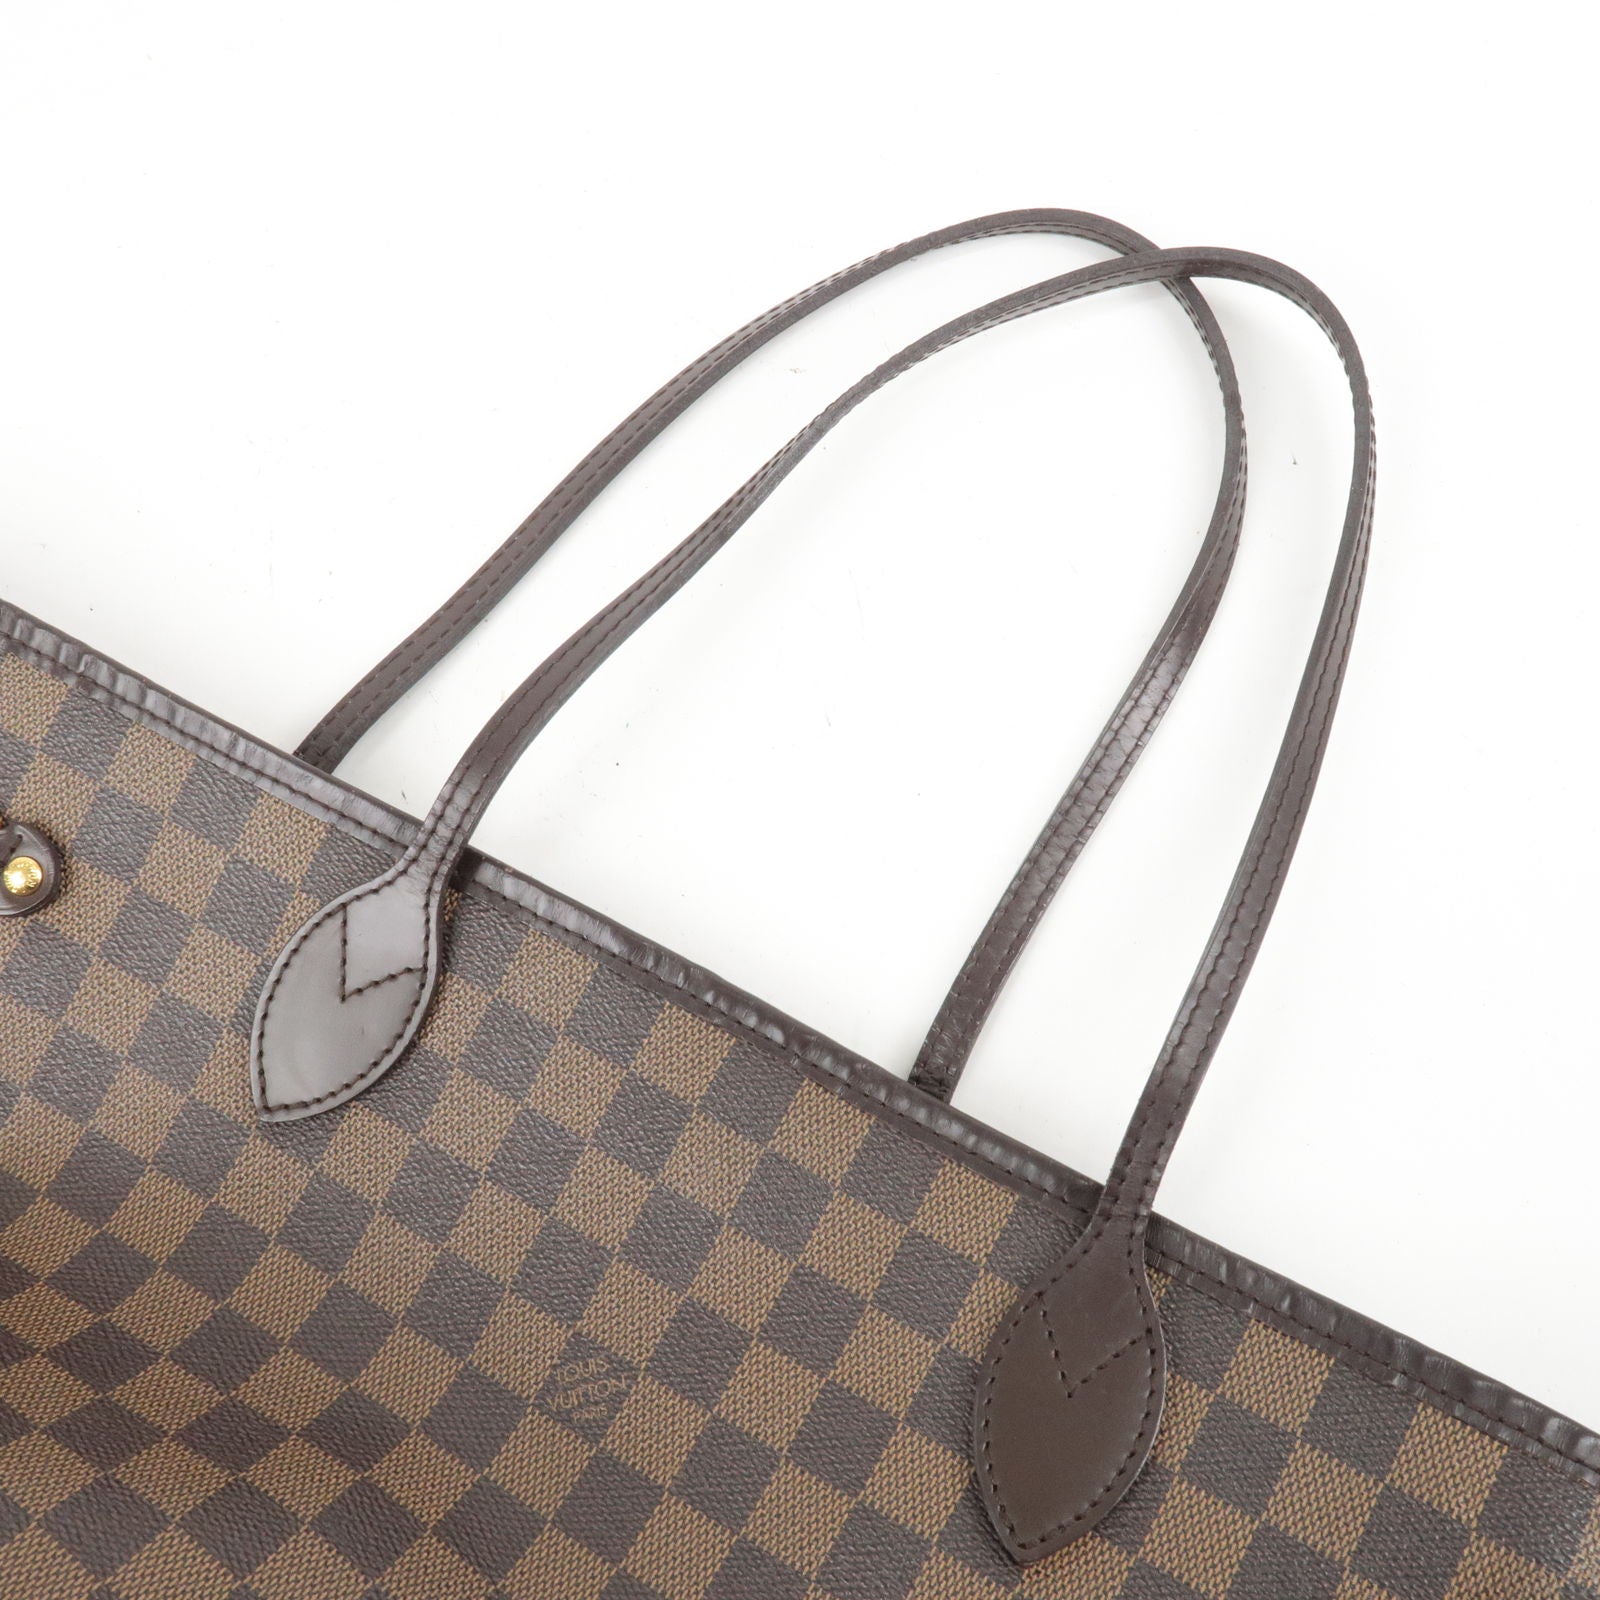 Louis Vuitton Vintage Damier Ebene Backpack (2007)